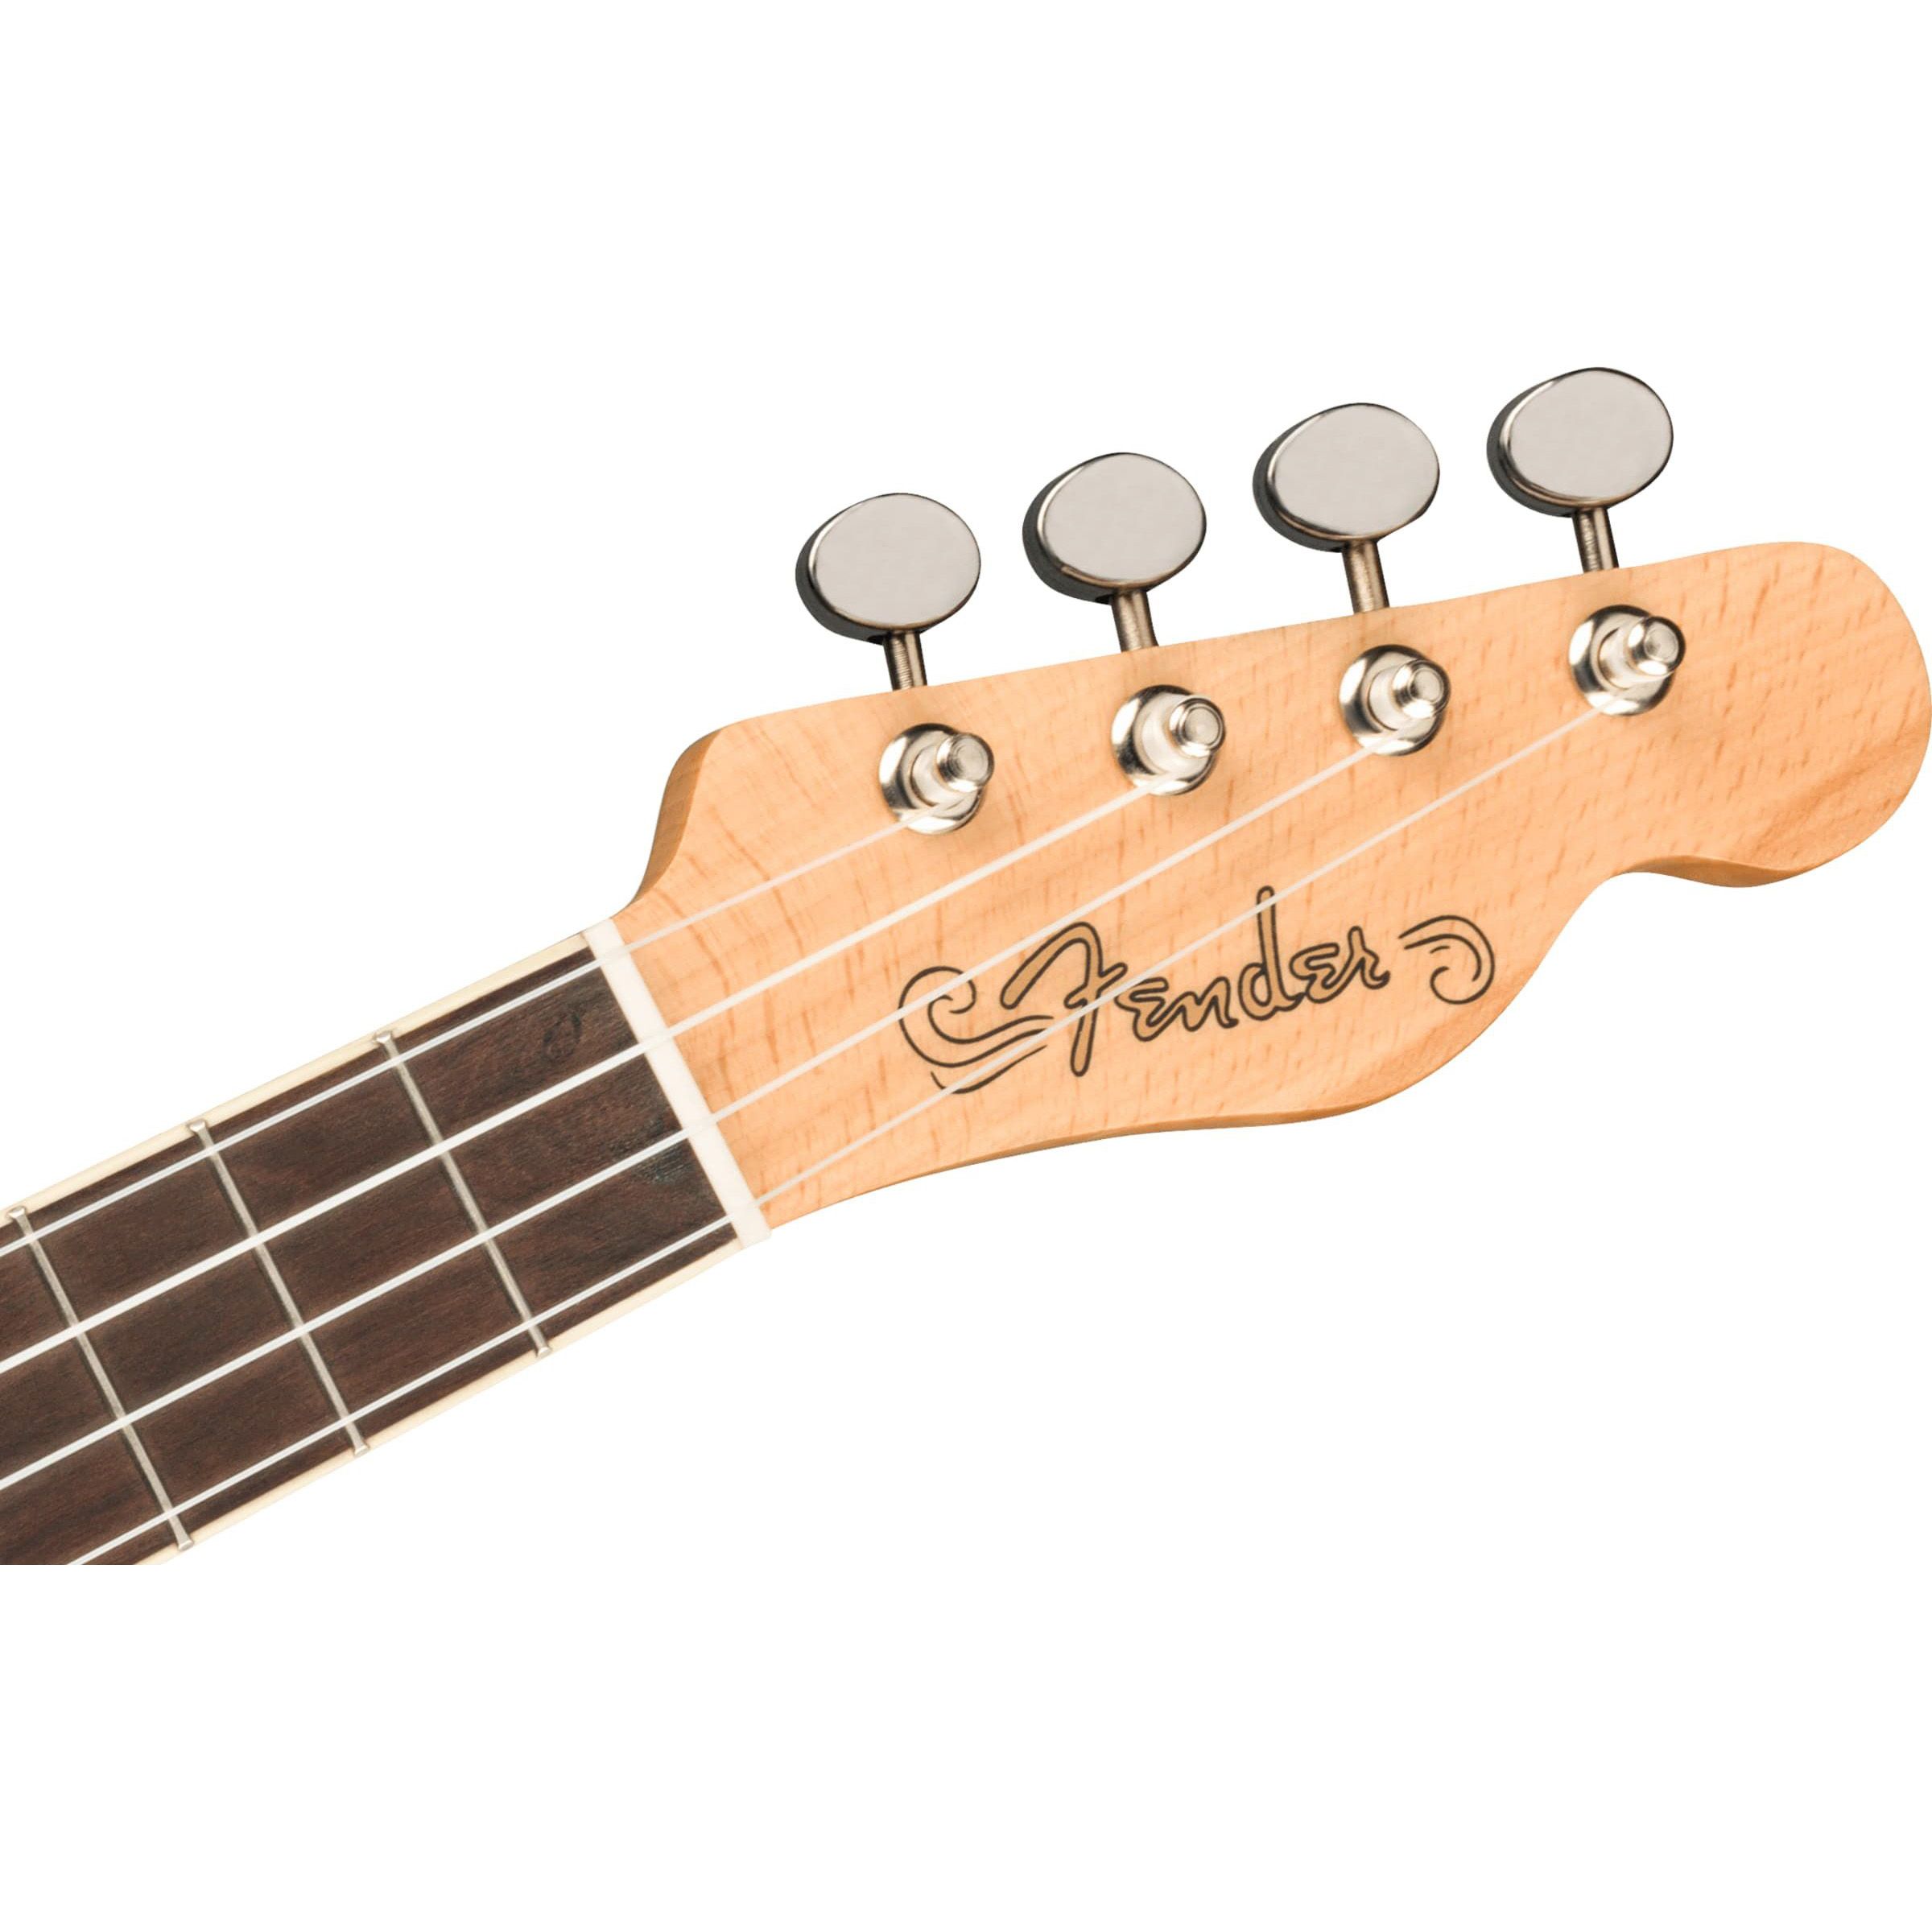 Fender Fullerton Tele Uke Butterscotch Blonde Народные инструменты